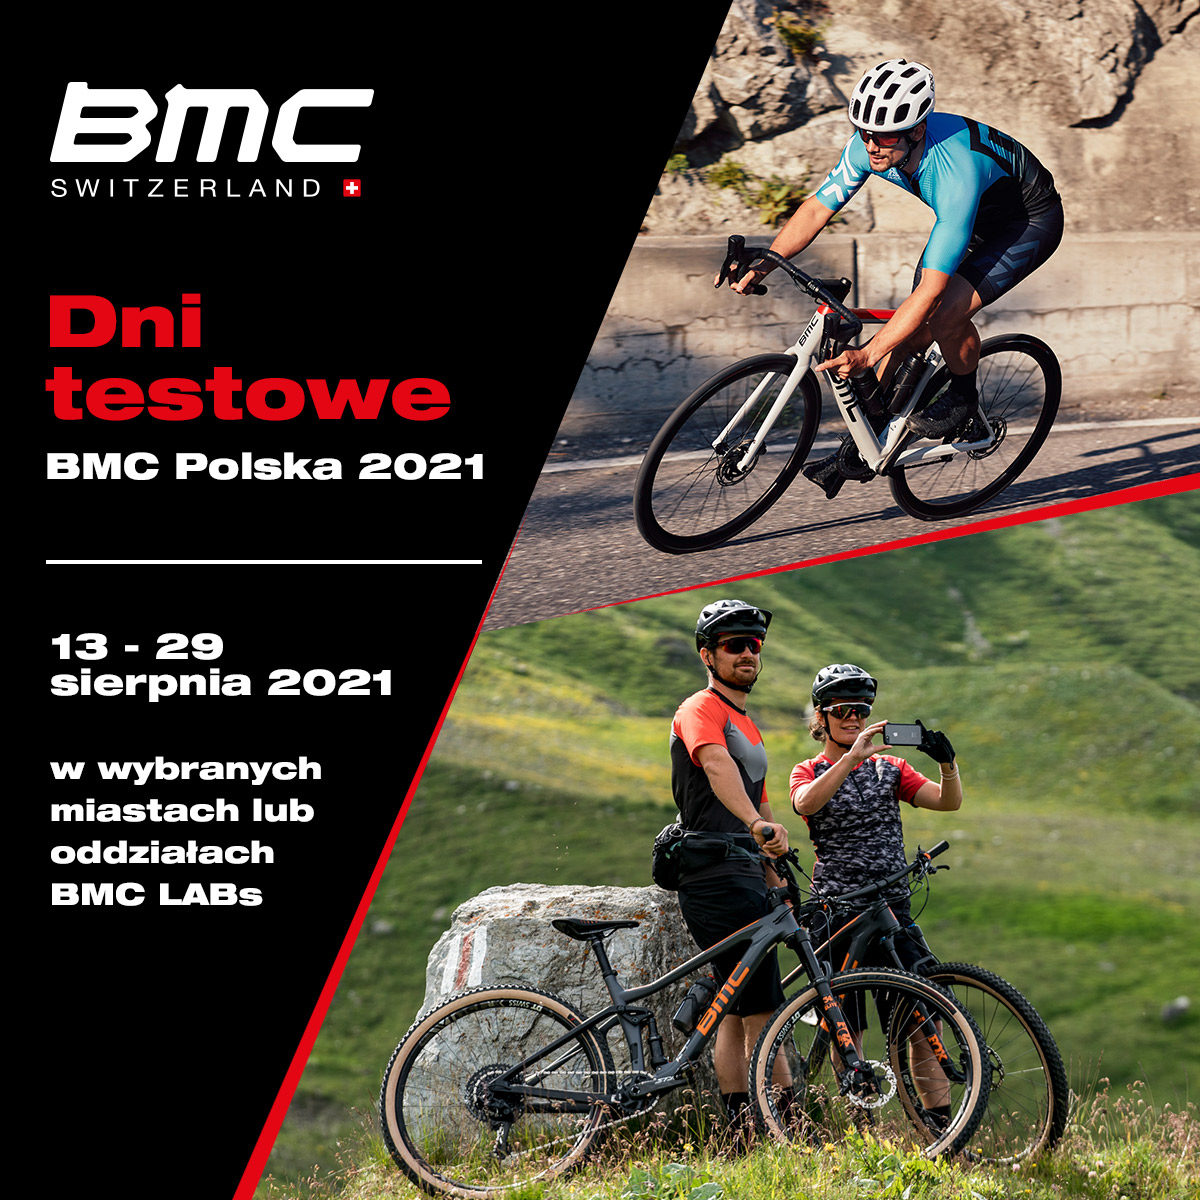 Dni testowe BMC Polska 2021